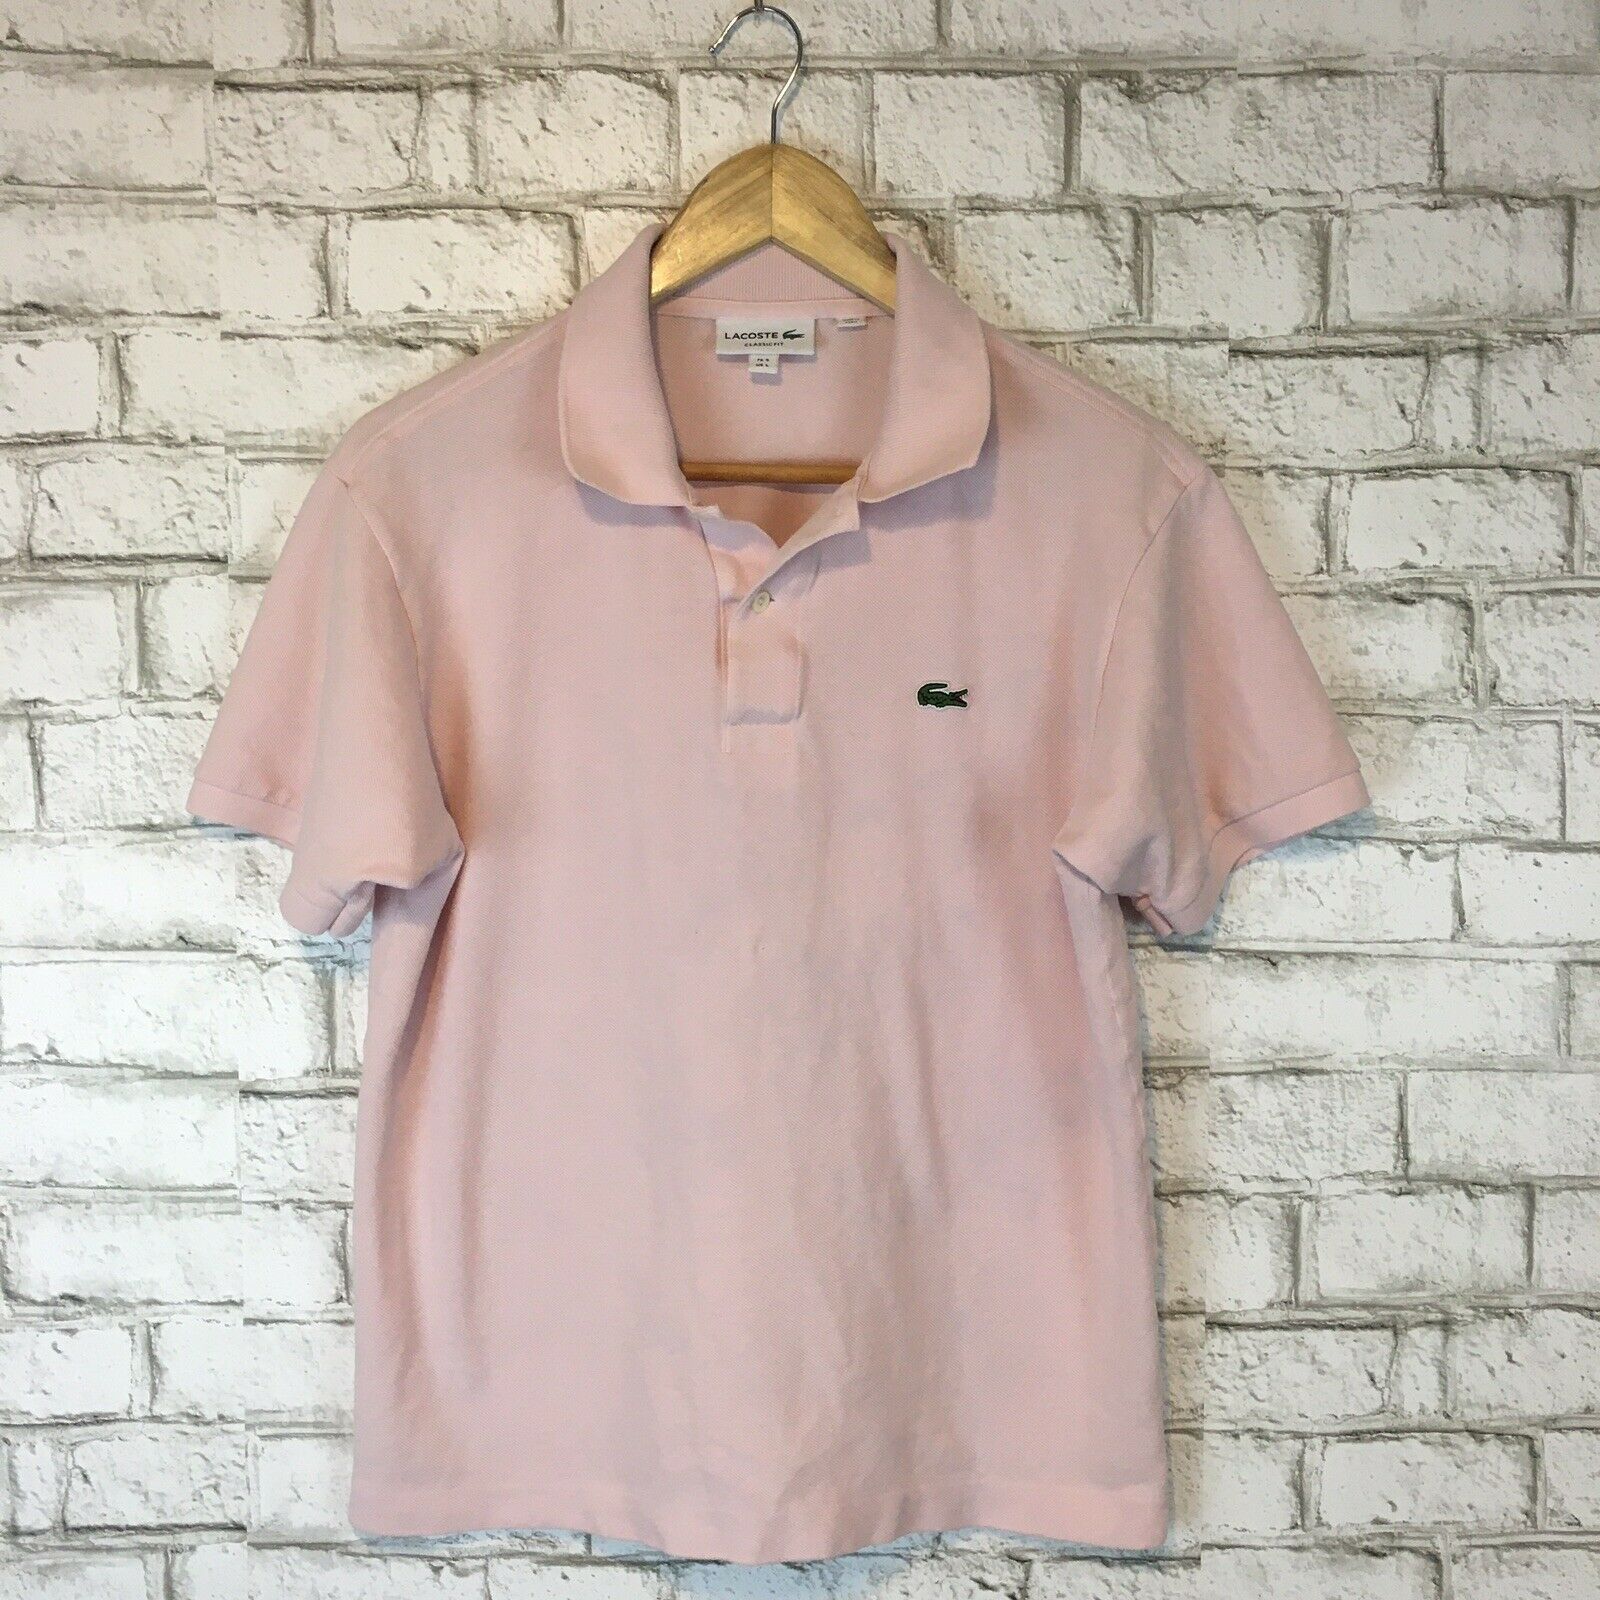 Lacoste Men's Classic Fit Light Pink Preppy Polo Shirt Size Large FR ...